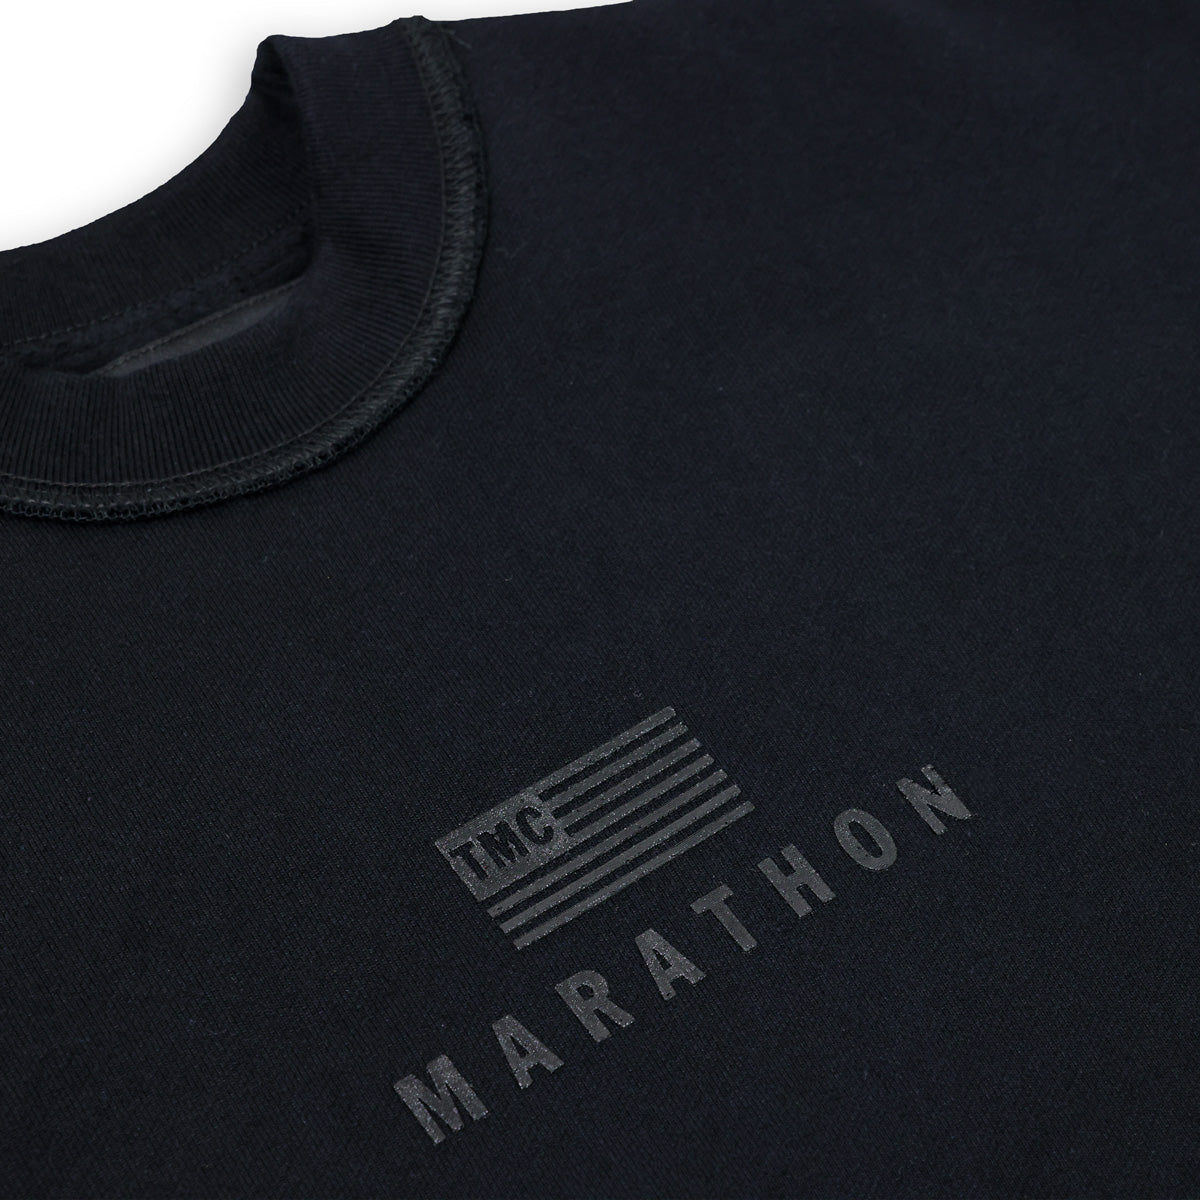 Marathon Modern Crewneck Sweatshirt - Black/Black - Close Up